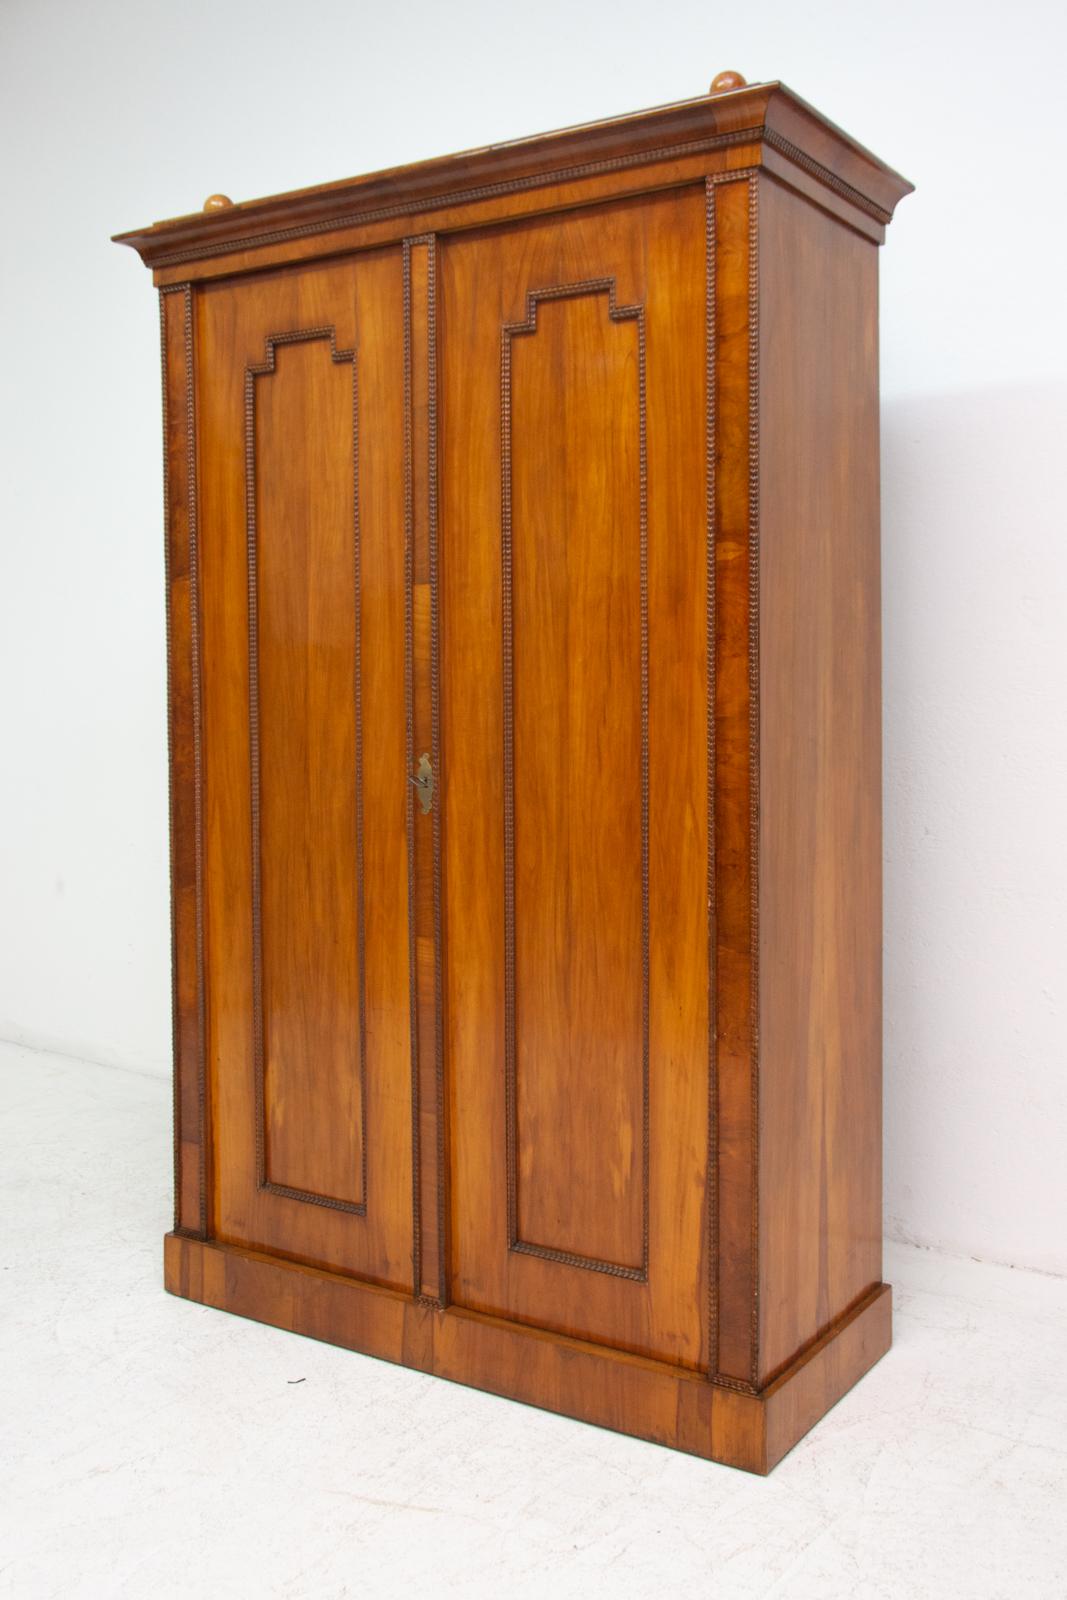 Antique Biedermeier Shelf Cabinet-Wardrobe, 1830s, Austria-Hungary In Excellent Condition For Sale In Prague 8, CZ